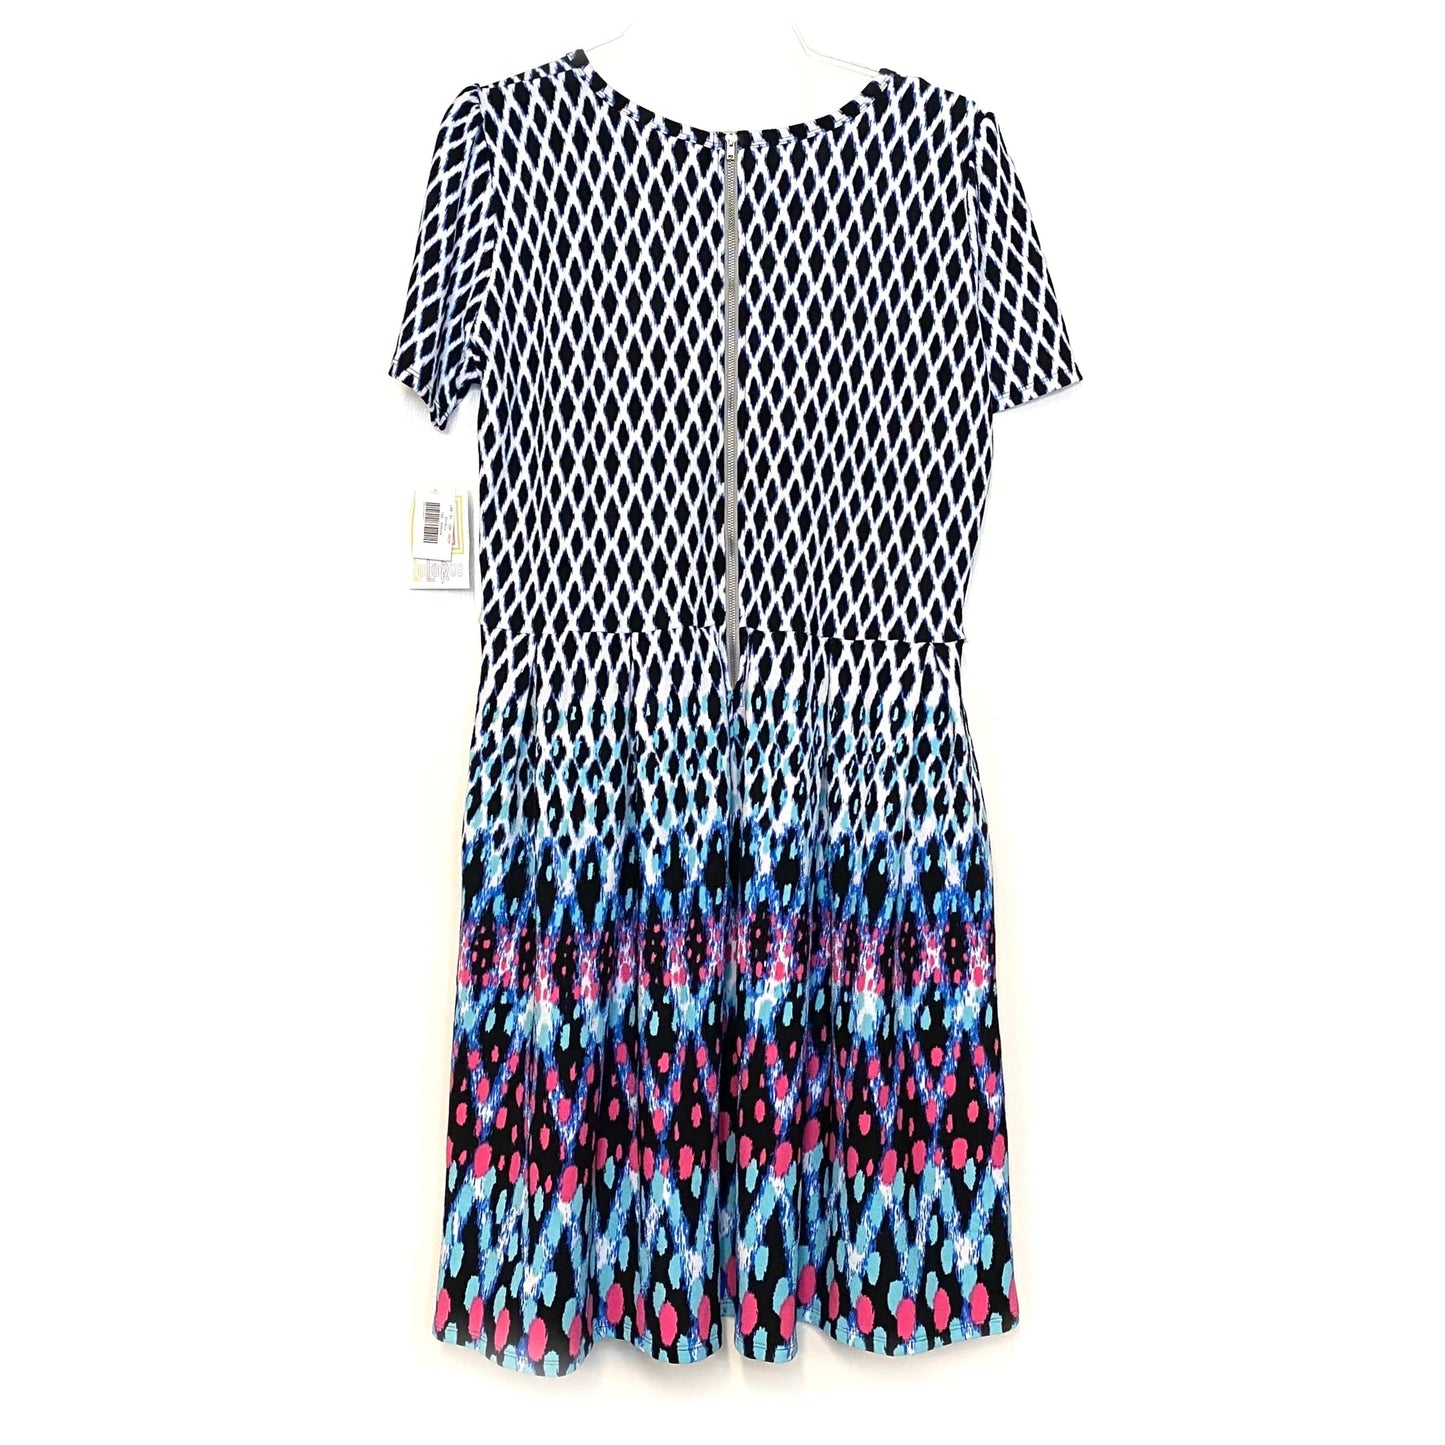 LuLaRoe UNICORN Size 3XL (24/26) Amelia White/Blue/Multicolor Geometric Dress S/s NWT